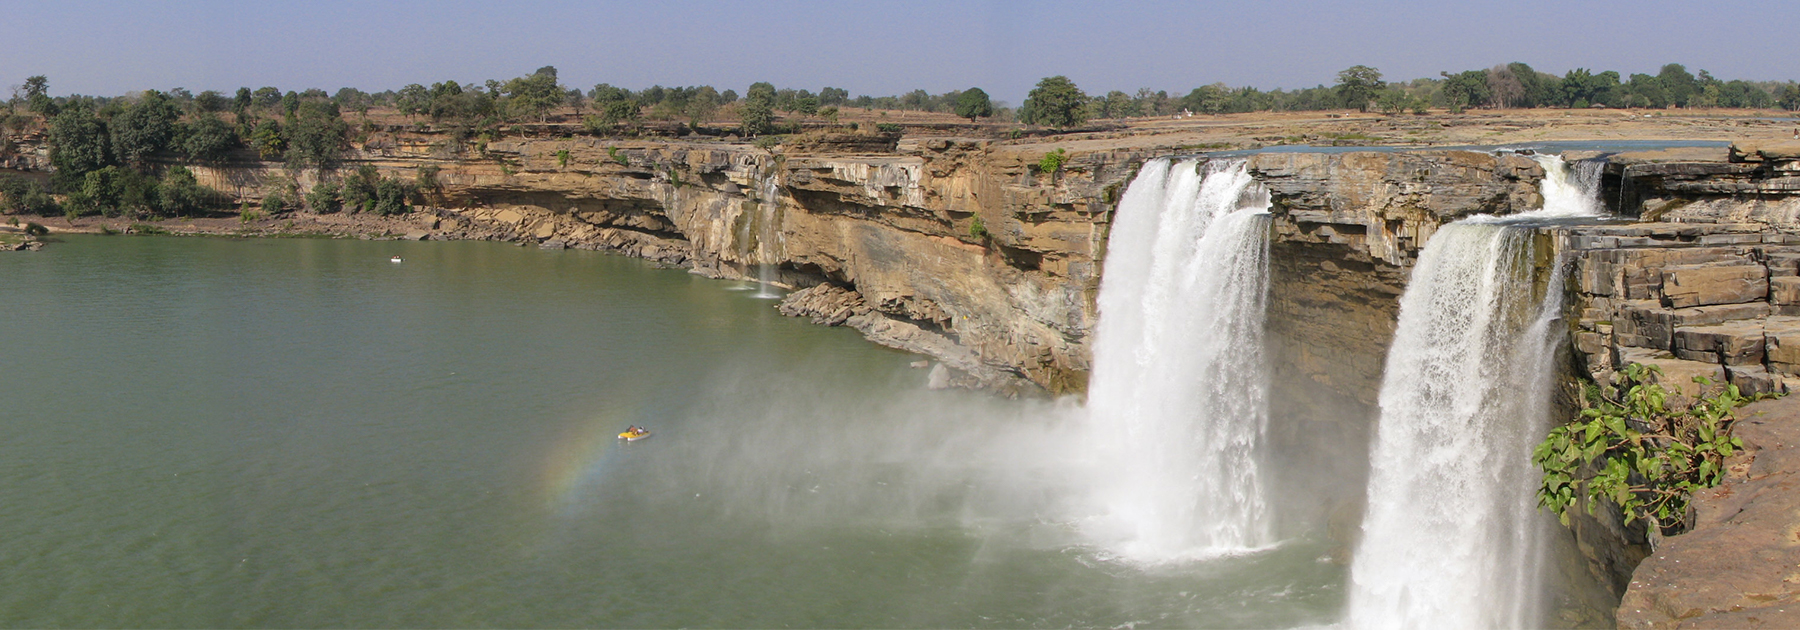 A view of Chitrakot Falls in Jagdalpur. (Vinay Nihal, licensed under CC BY-SA 3.0)